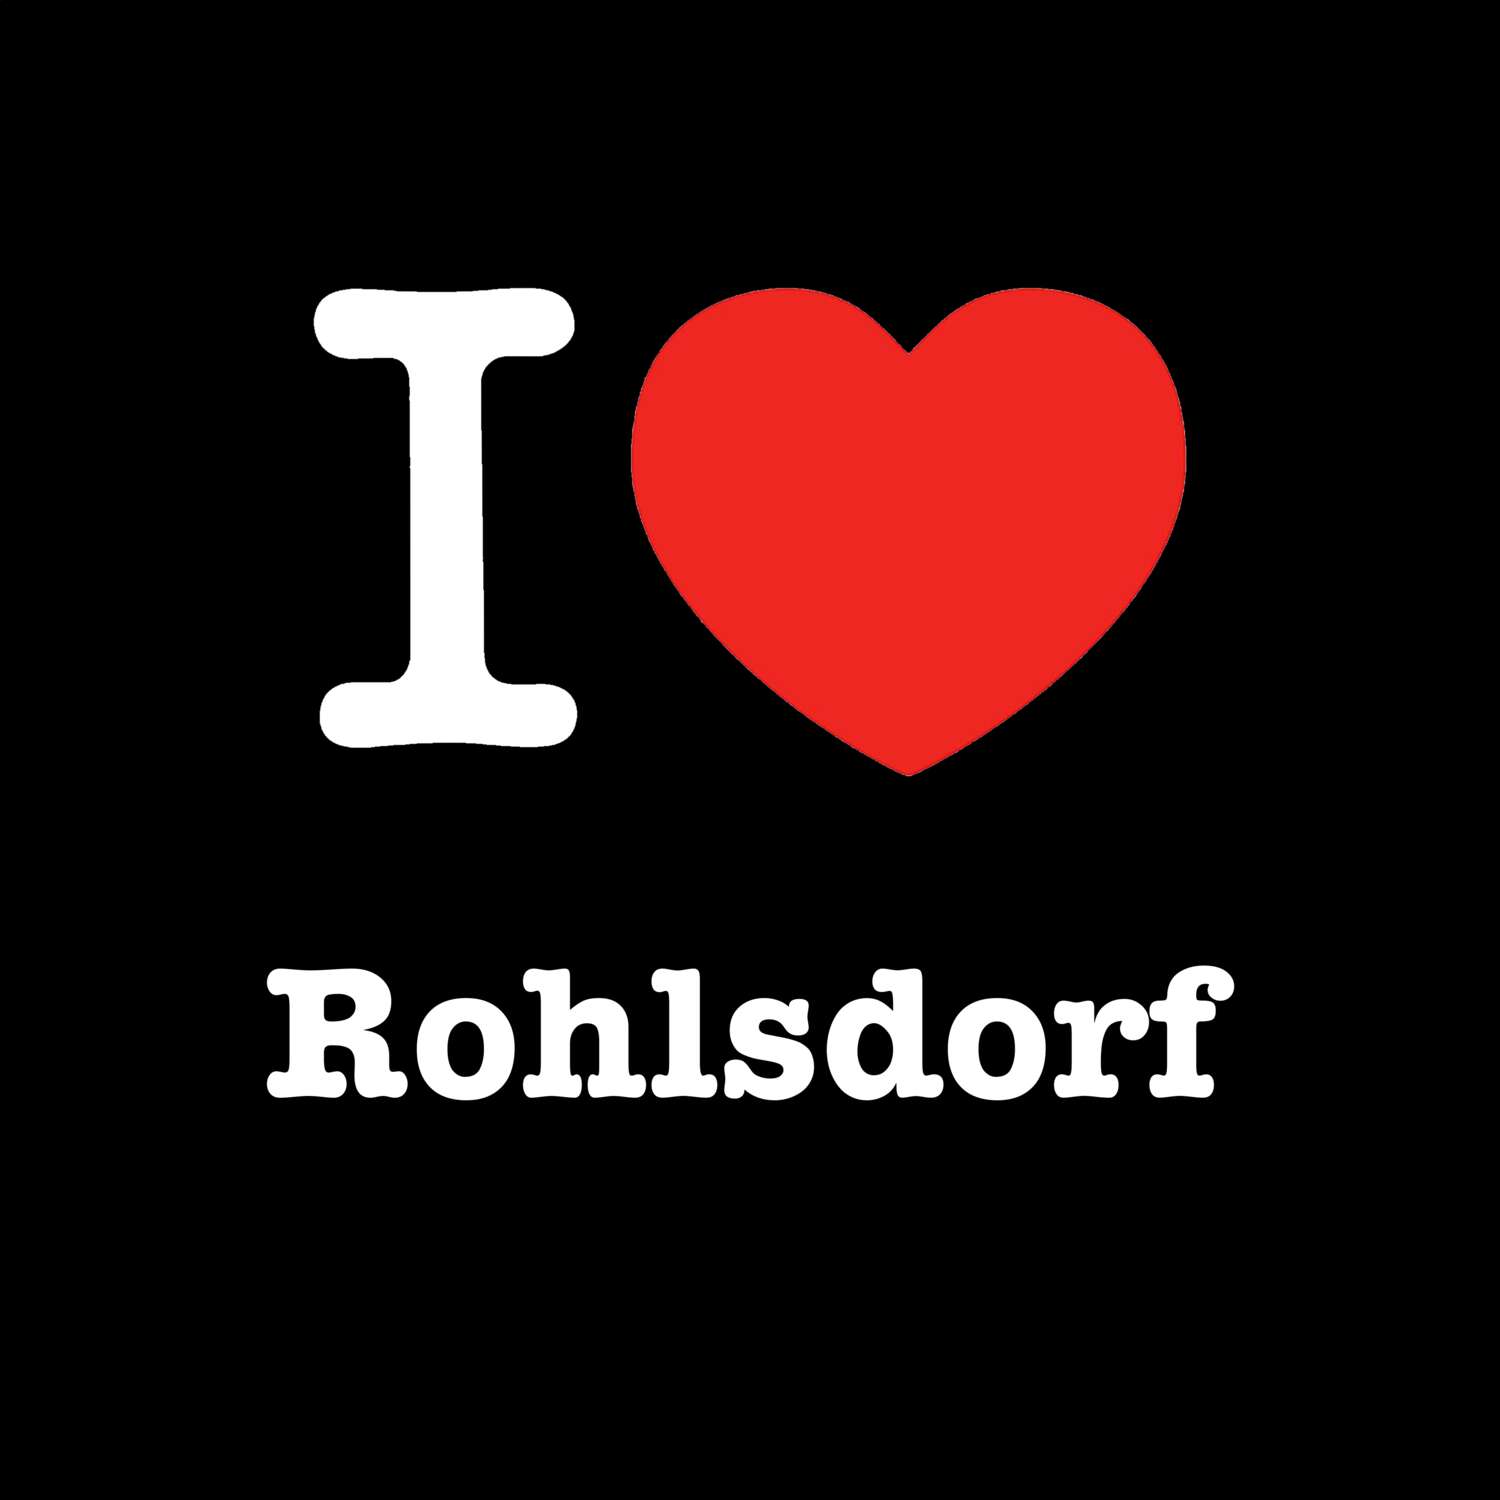 Rohlsdorf T-Shirt »I love«